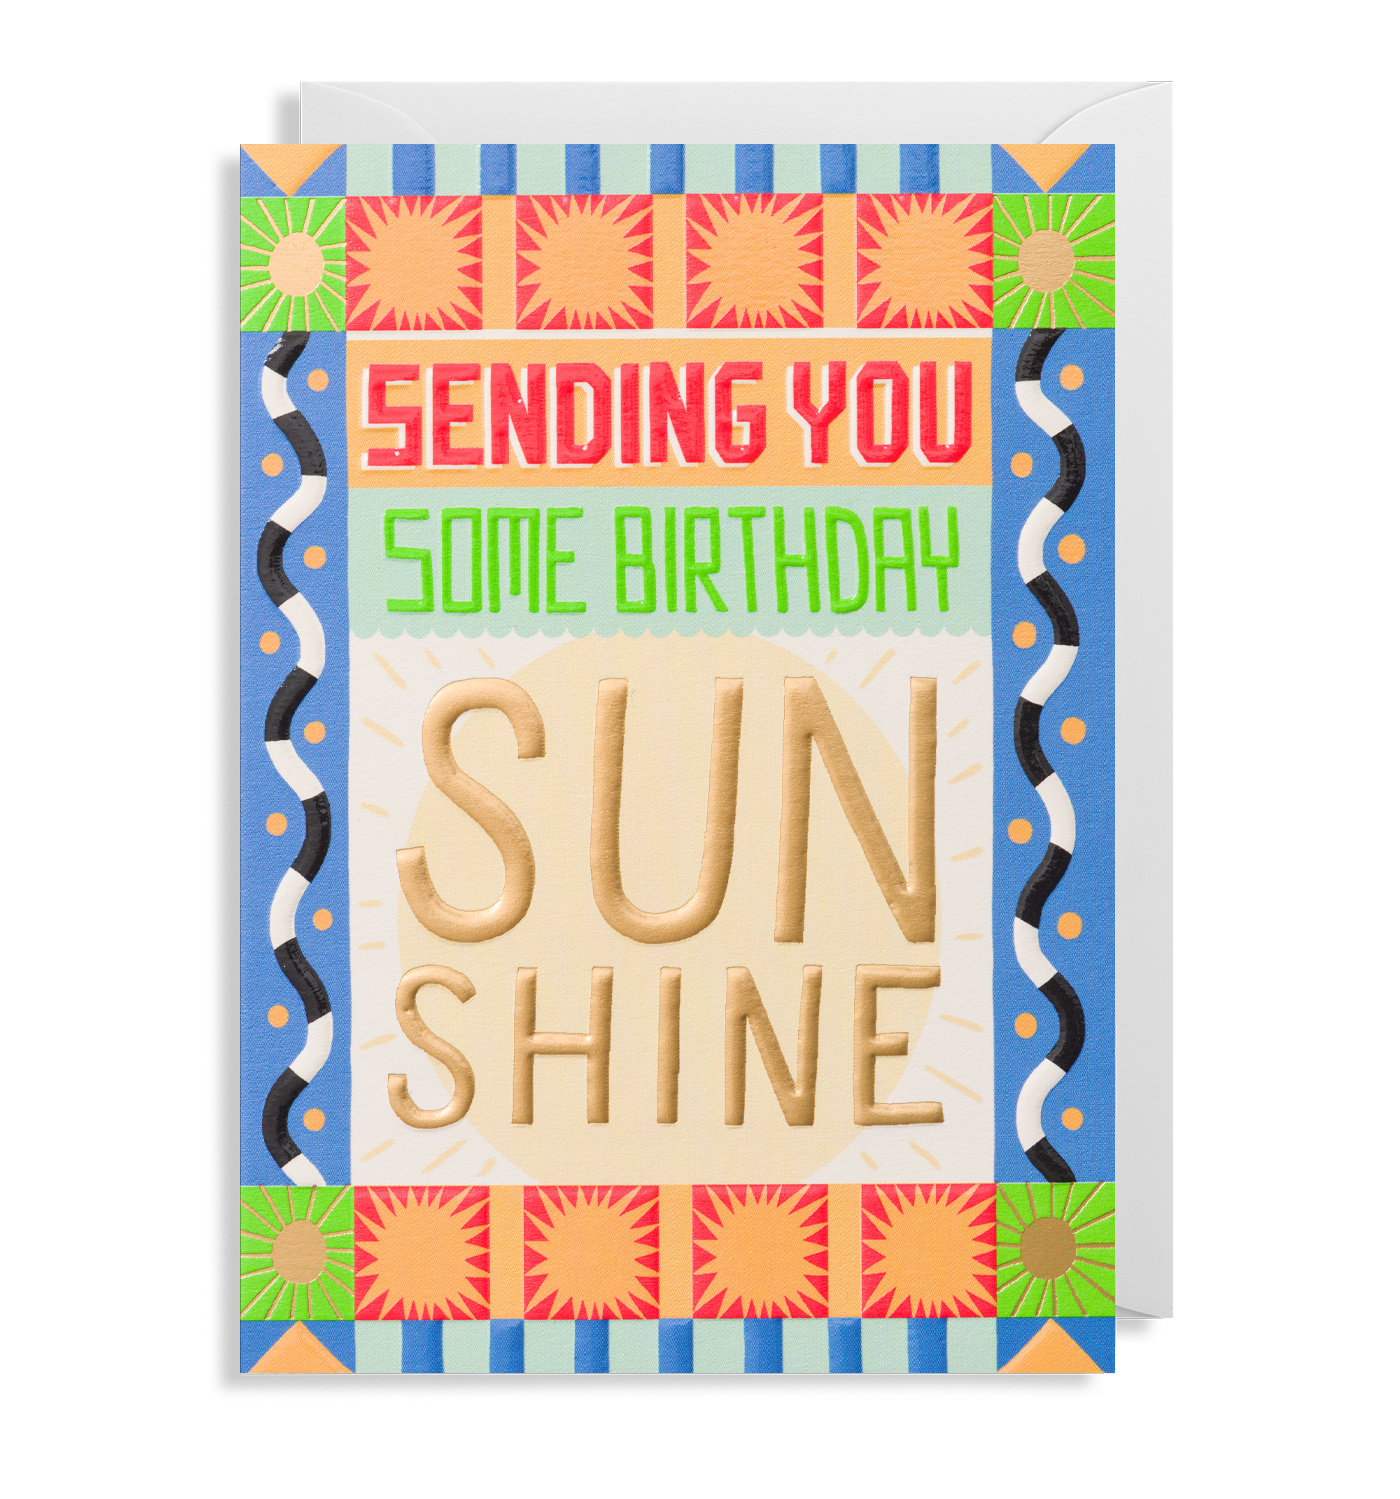 Birthday Sunshine Greetings Card